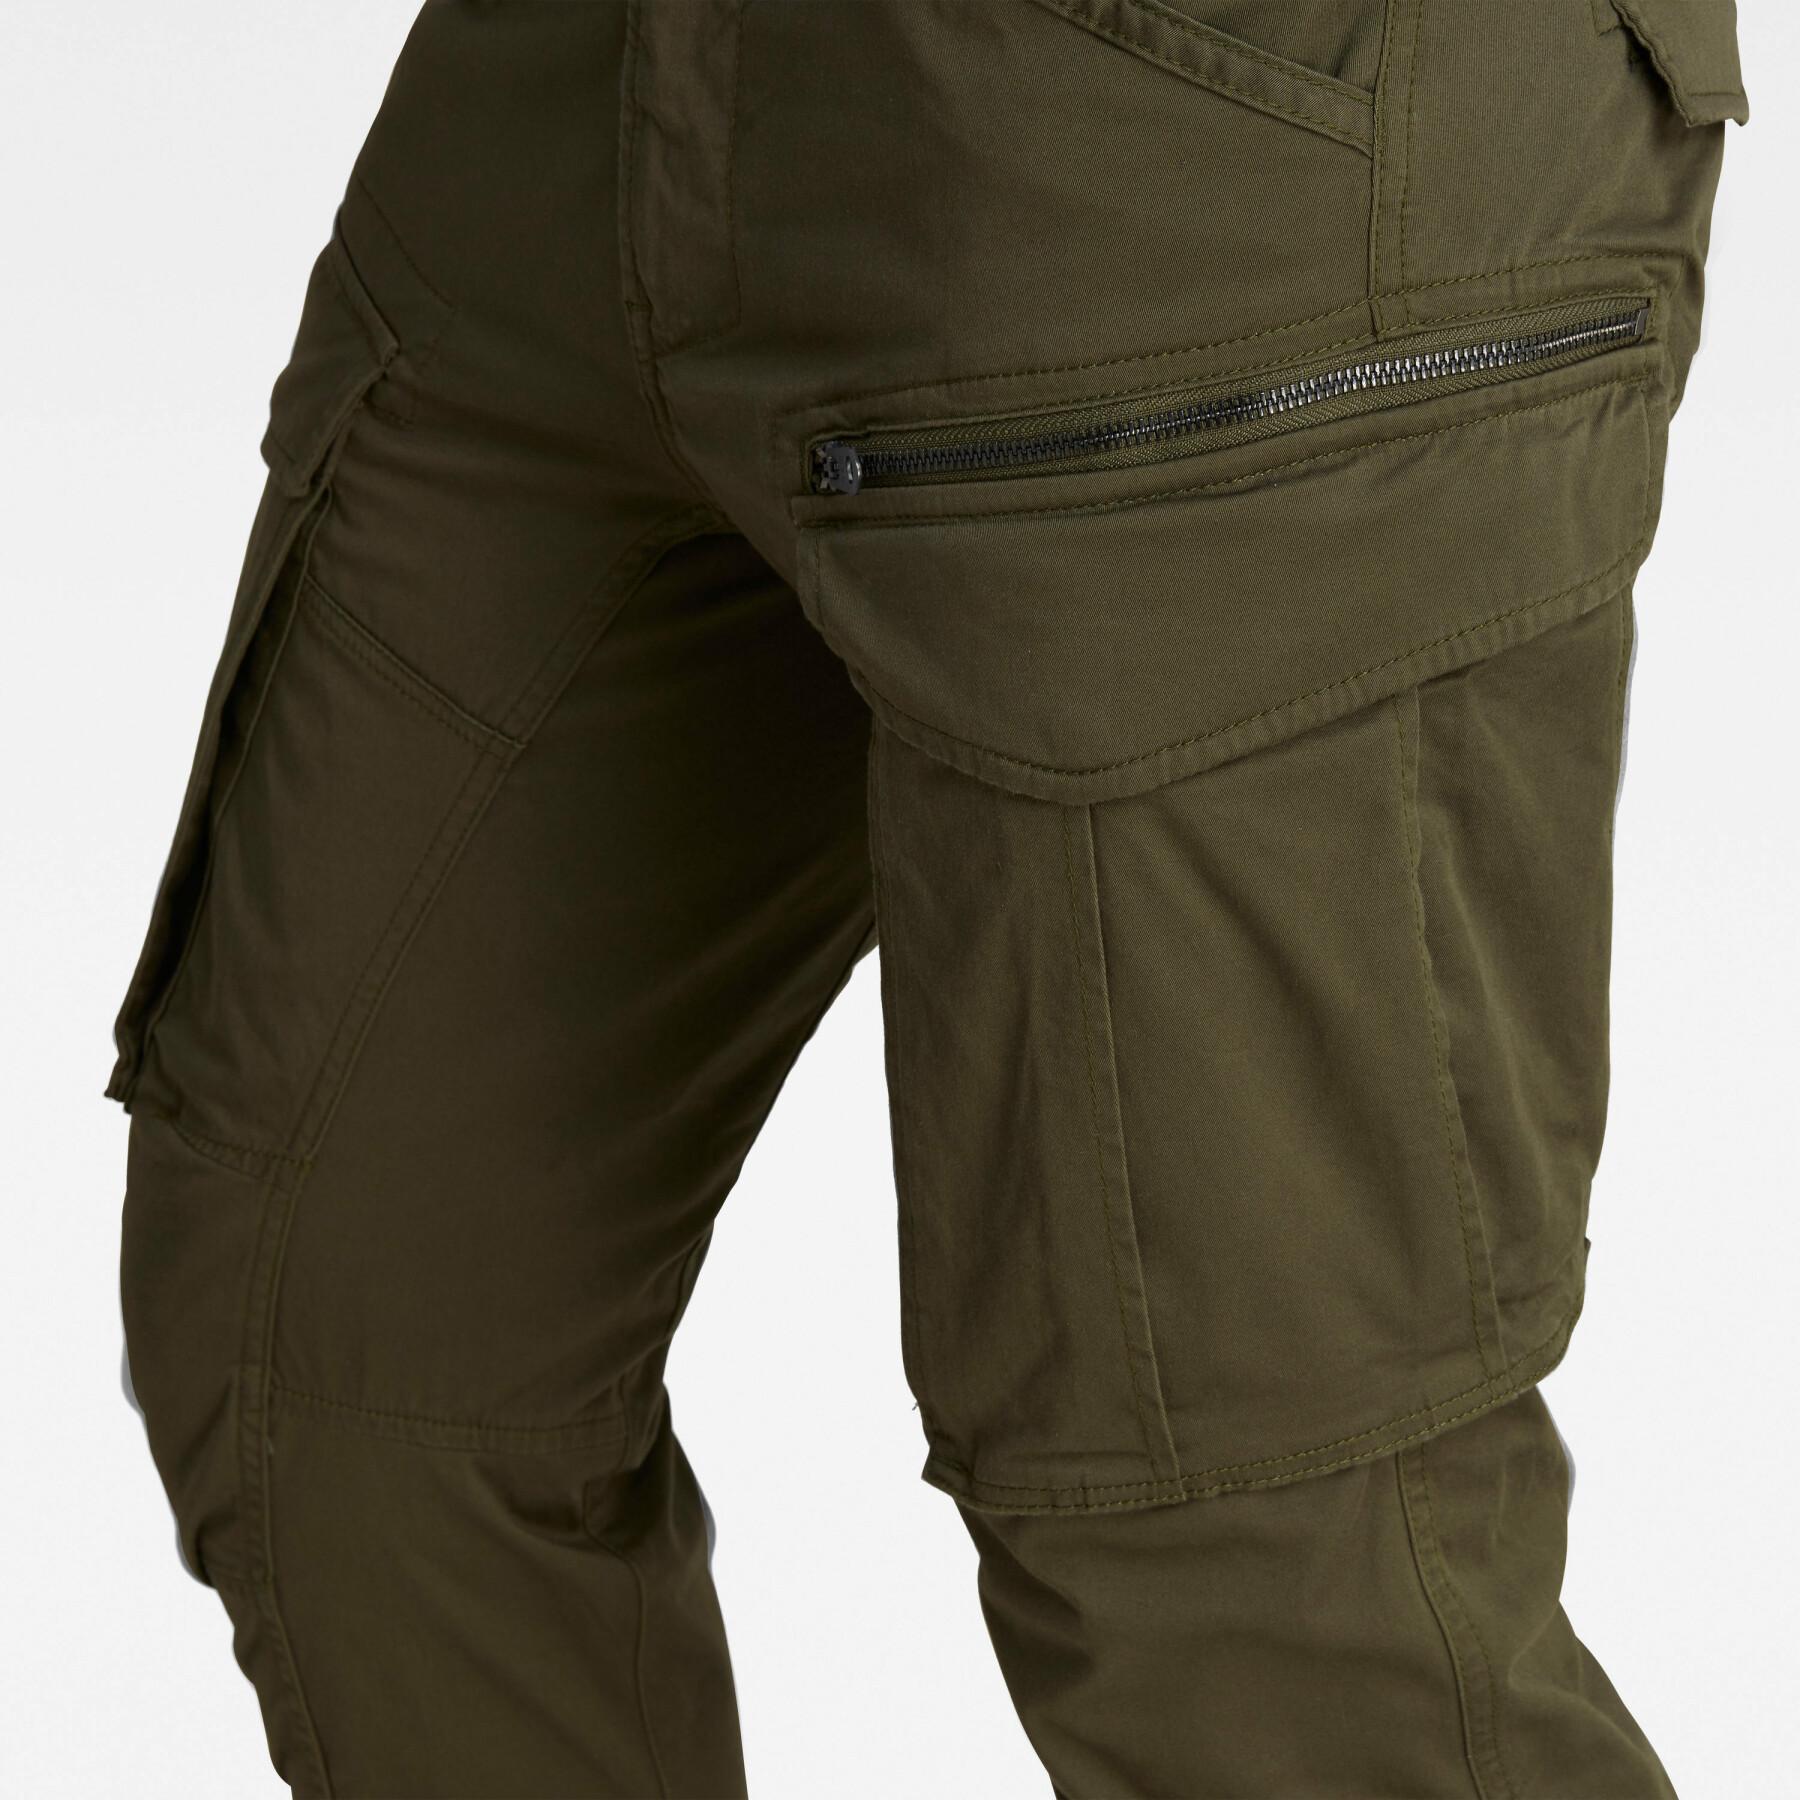 Pantalon G-Star Rovic zip 3d regular tapered